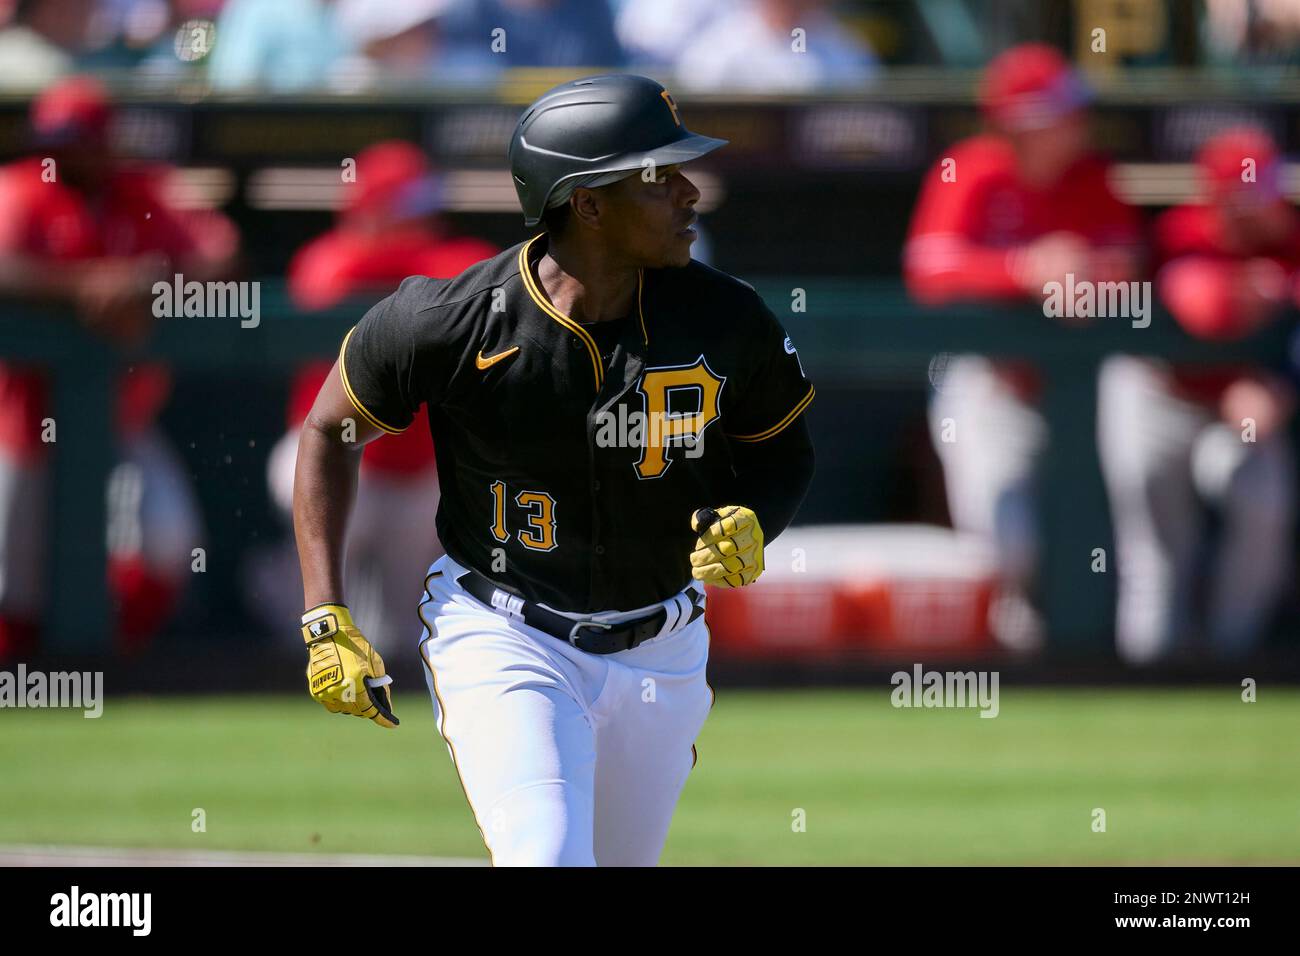 Pittsburgh Pirates Ke'Bryan Hayes (13) runs to first base during a